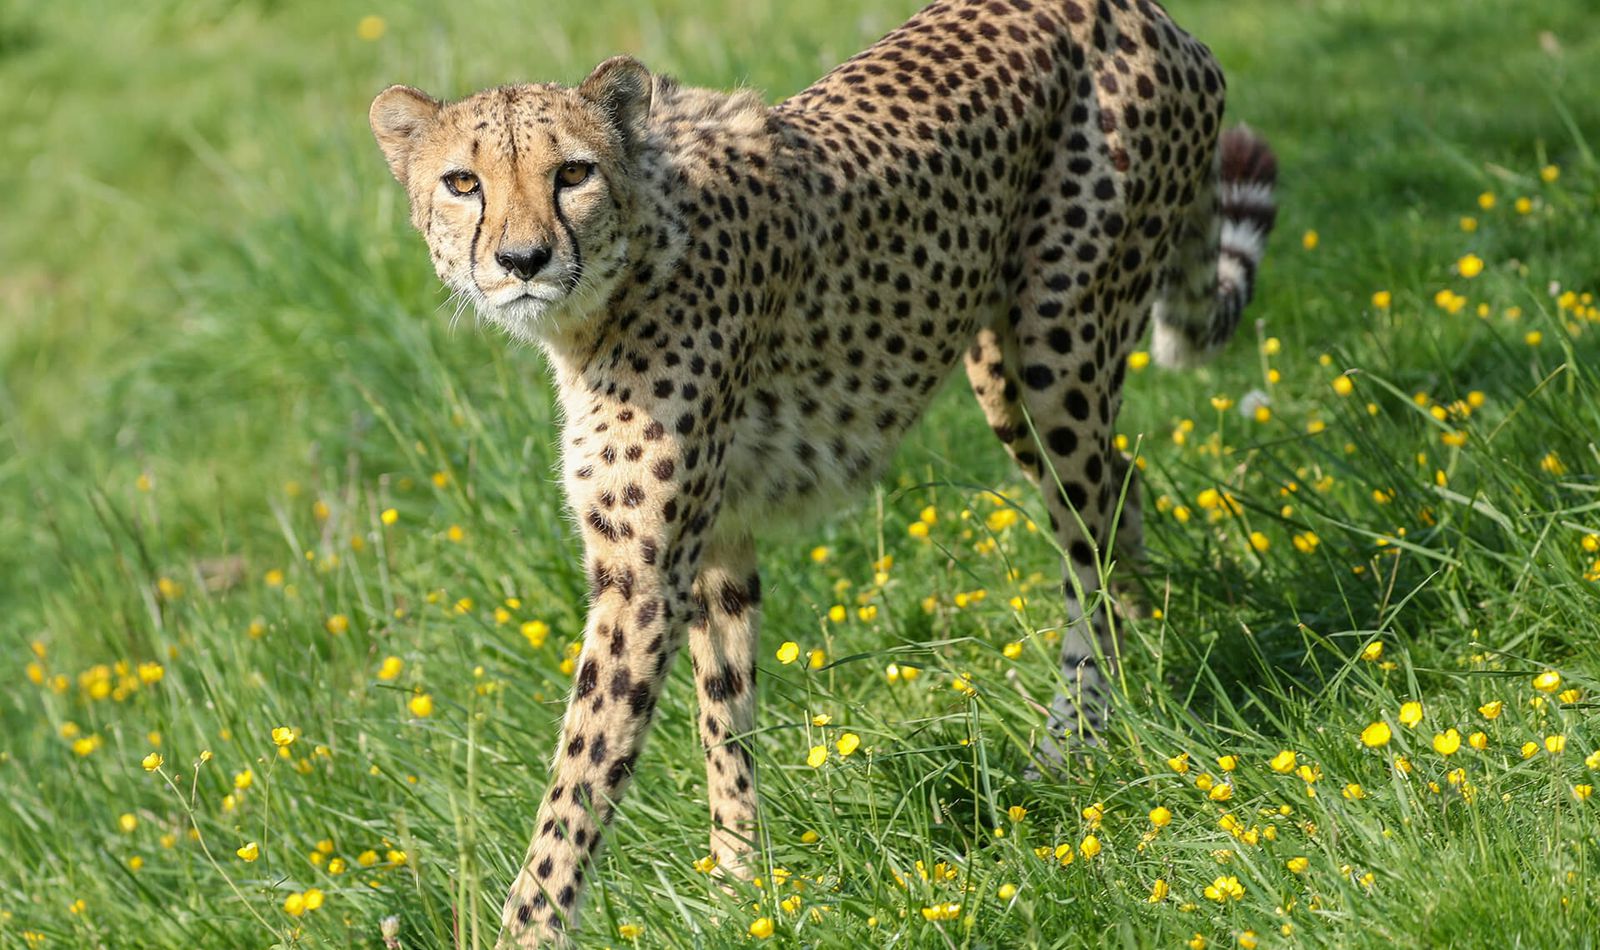 The Cheetah Territory | ZooParc de Beauval